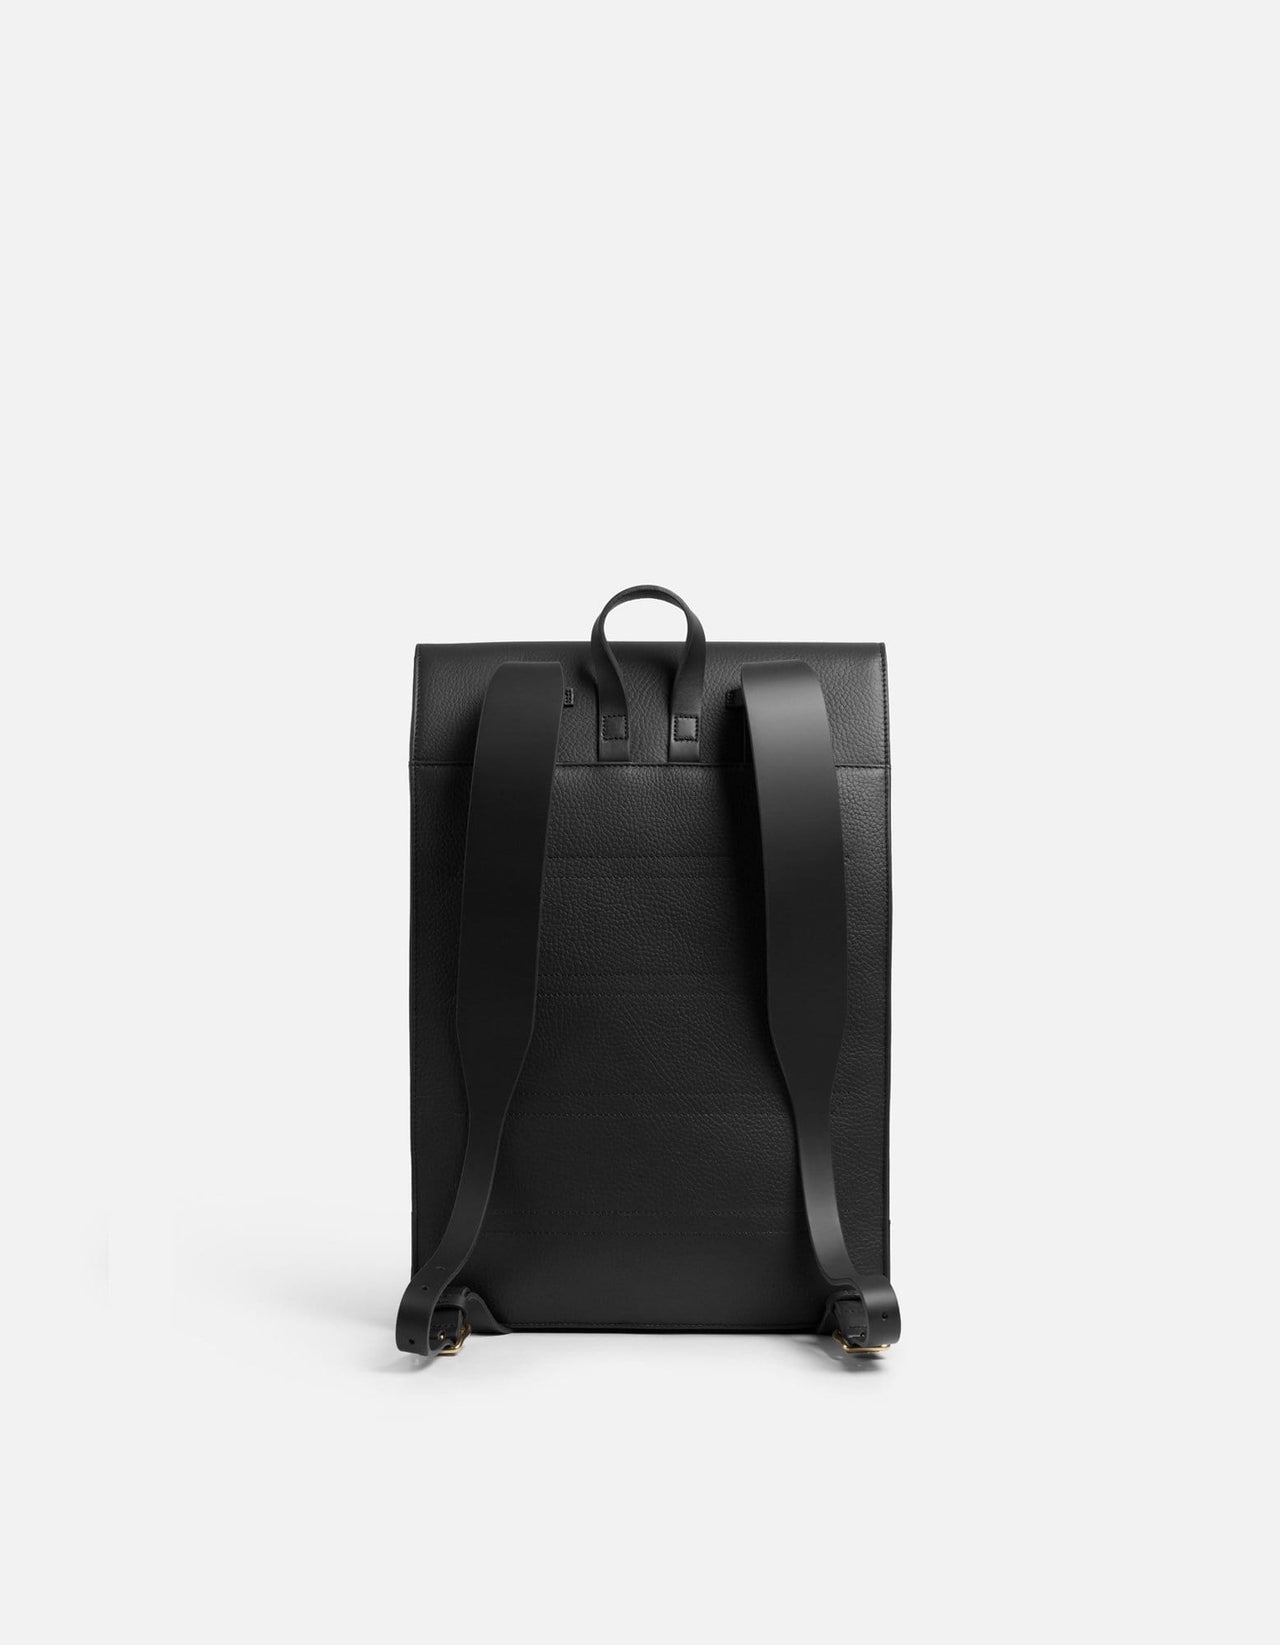 Harbour Rucksack, Black Textured | Men's Leather Bags | Miansai